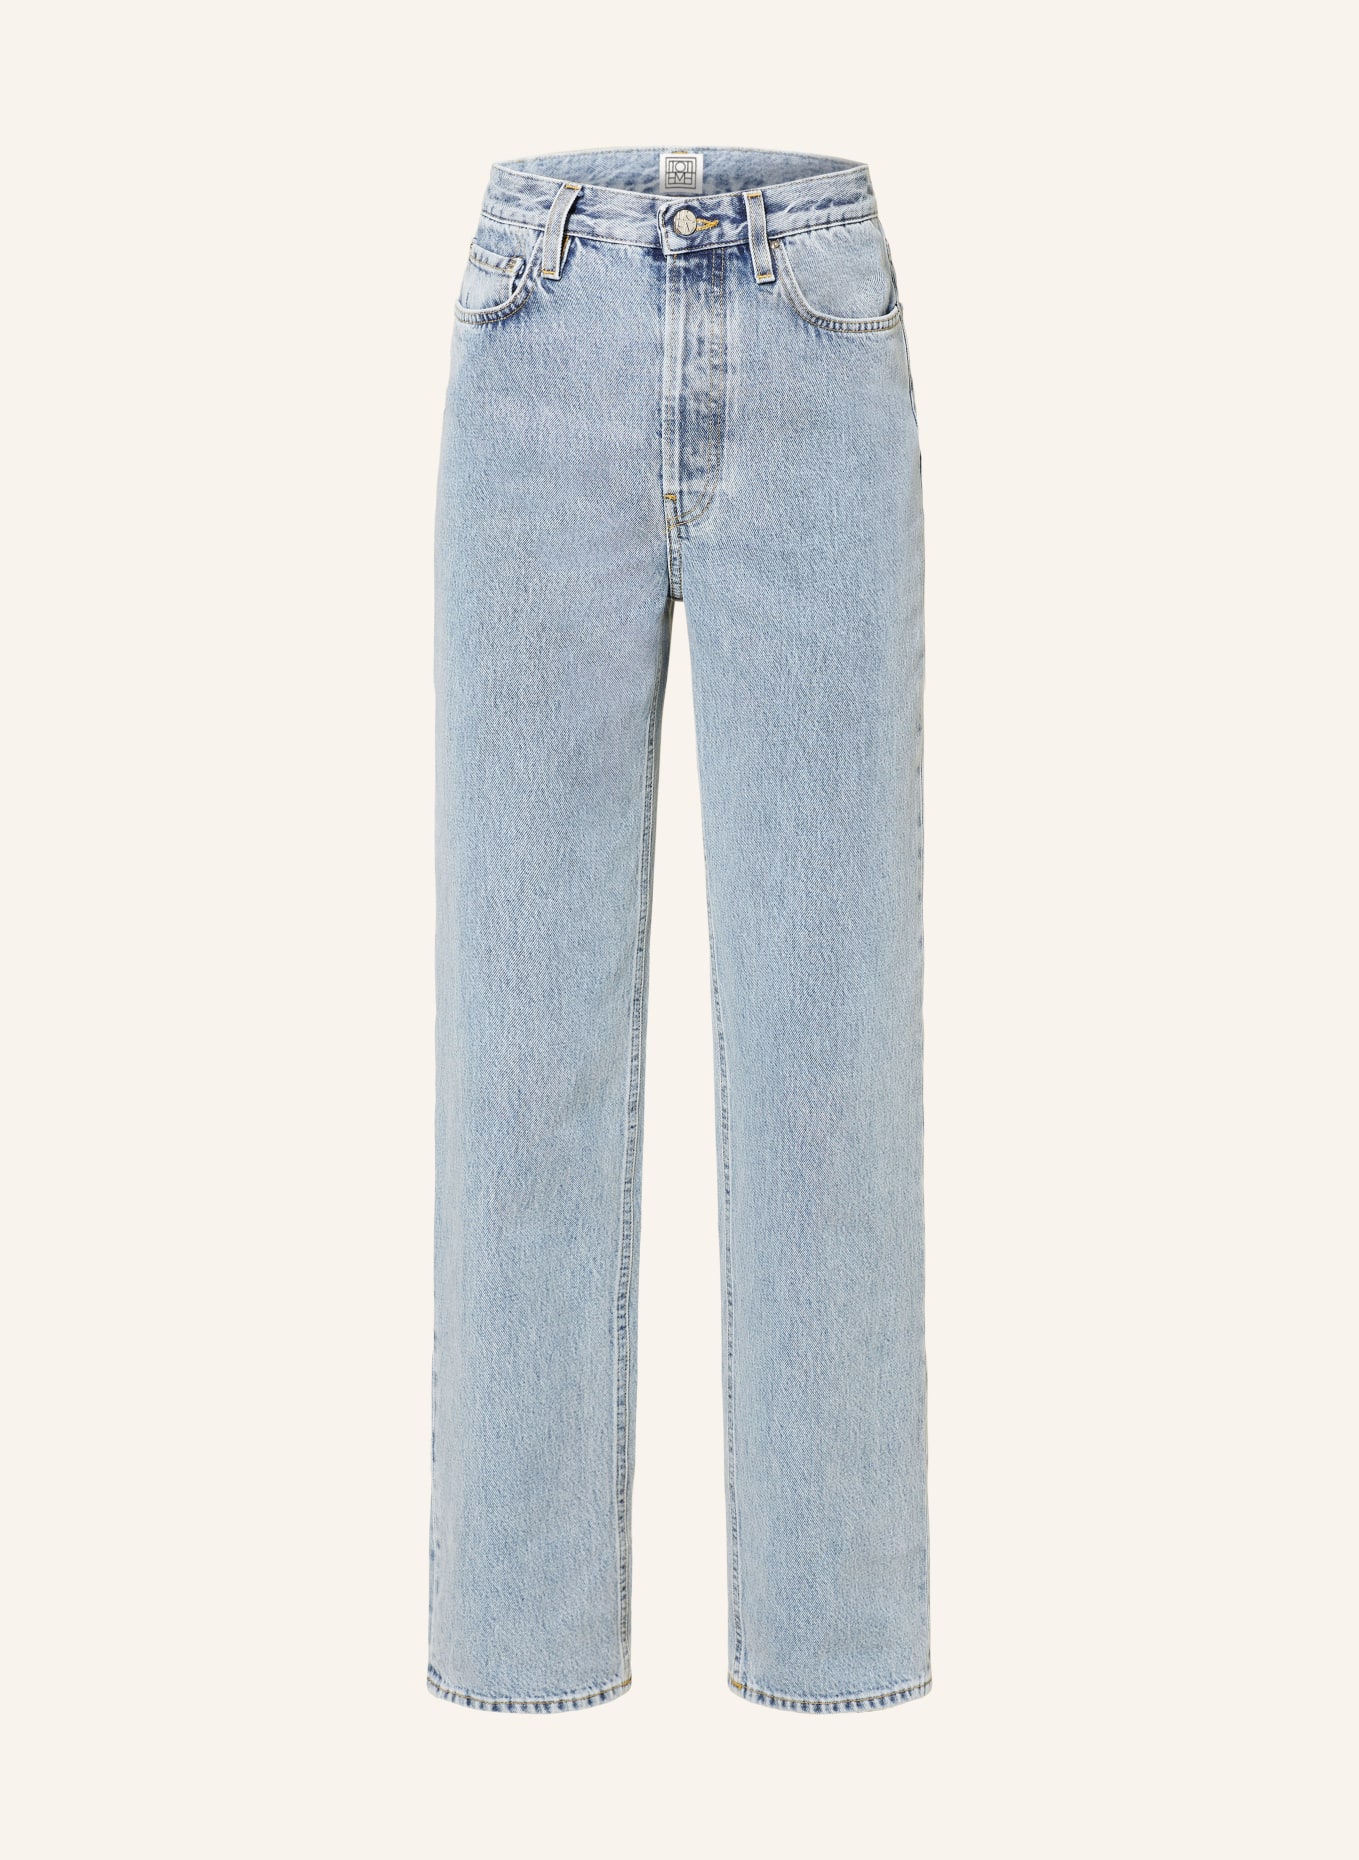 TOTEME Jeans, Farbe: 184 COOL BLUE (Bild 1)